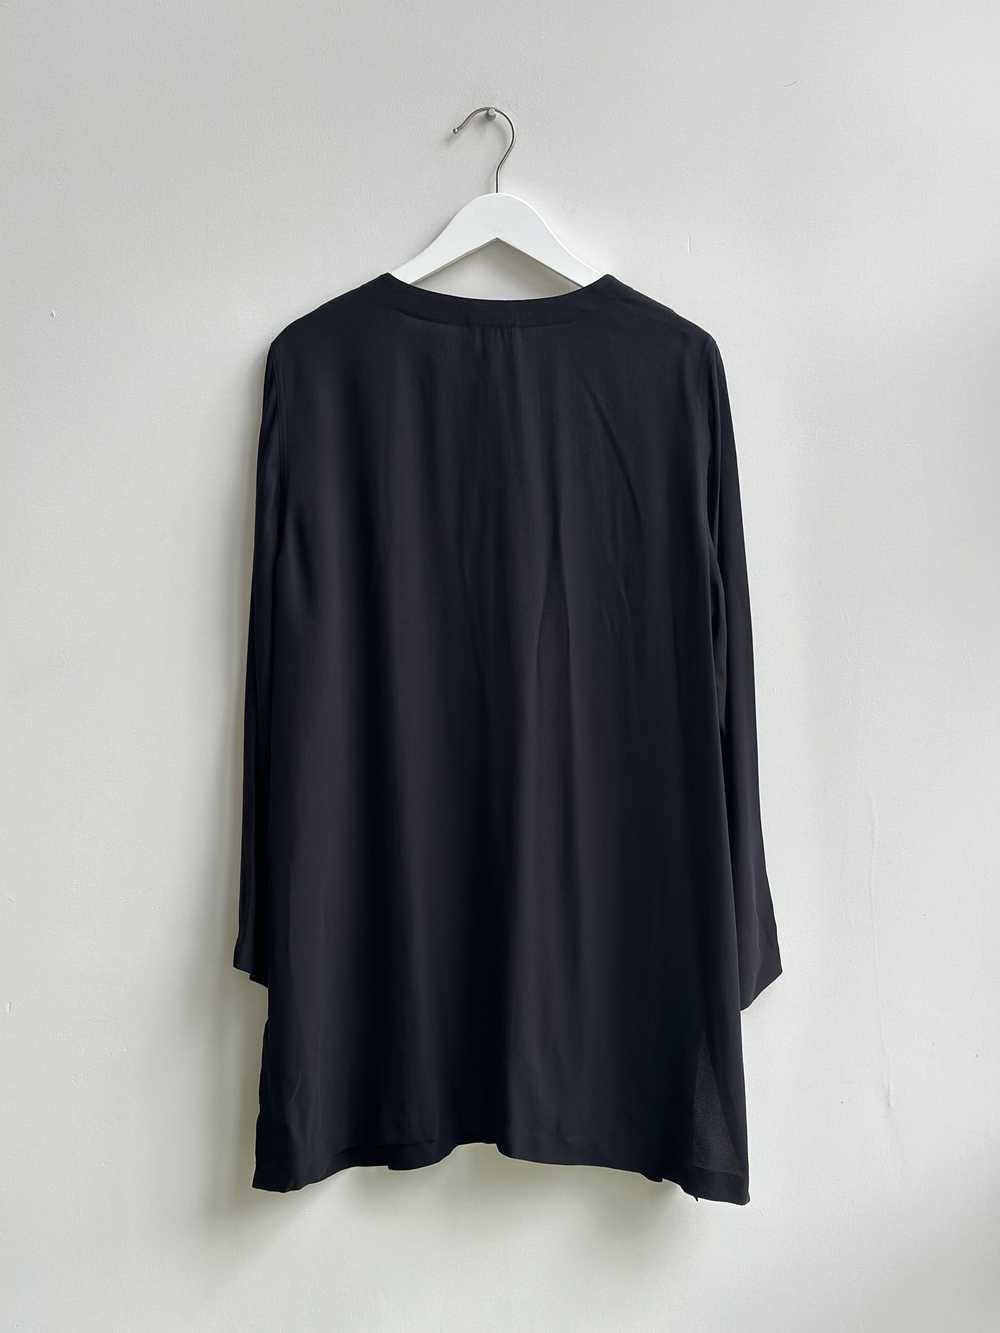 Eileen Fisher Oversized Black Silk Top Size XL - image 2